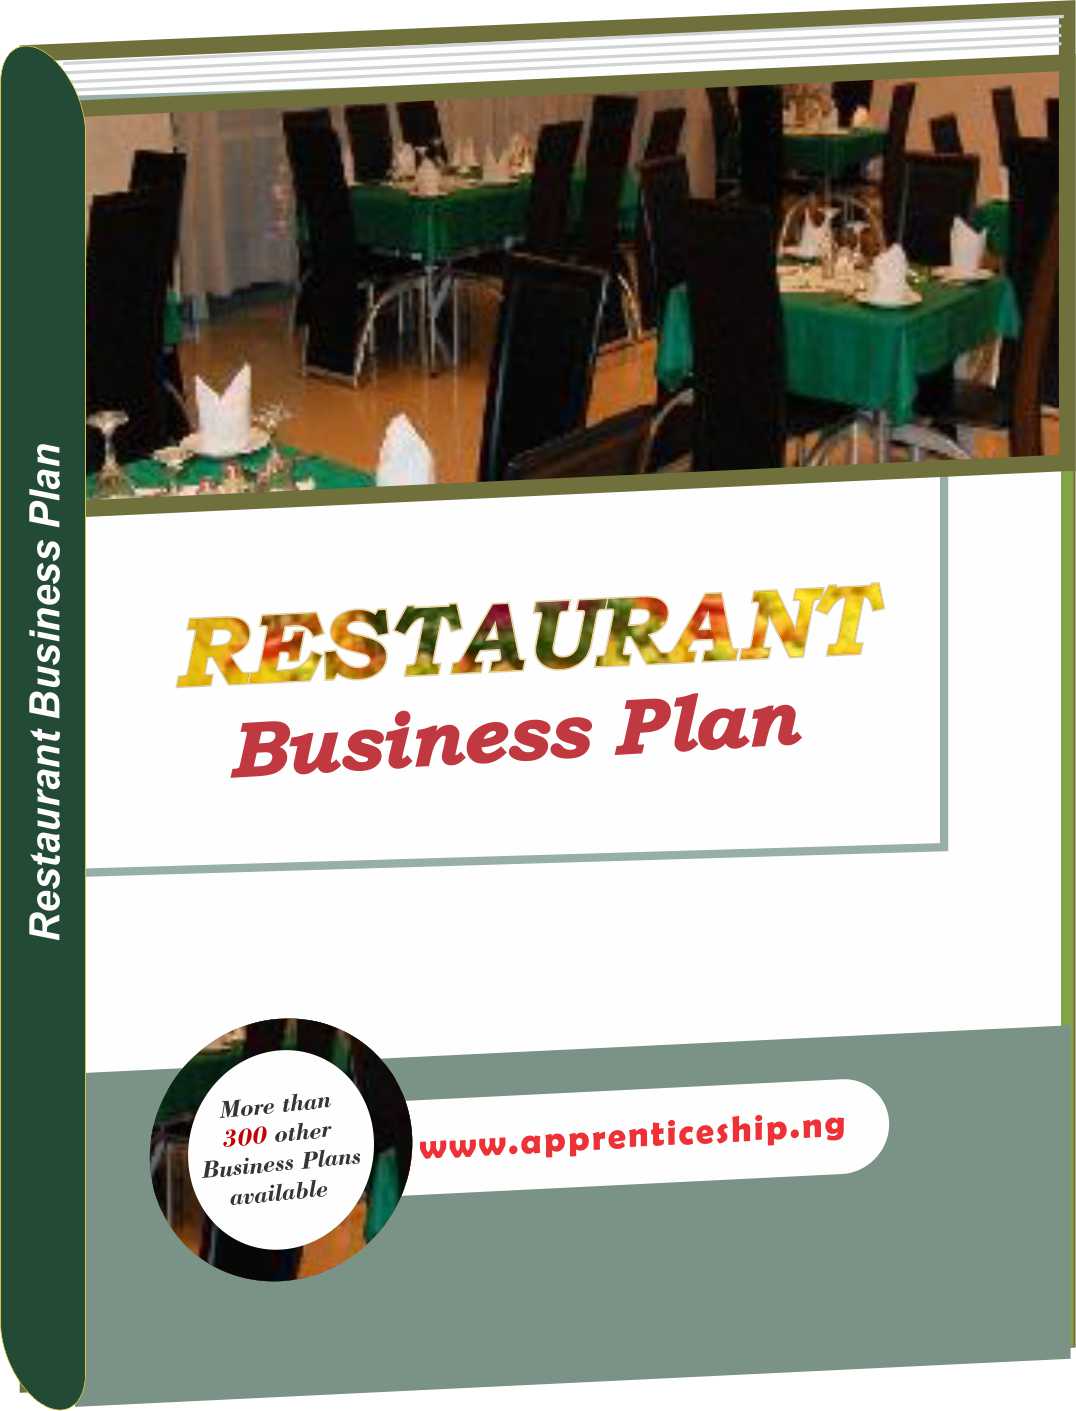 restaurant business plan samples in nigeria